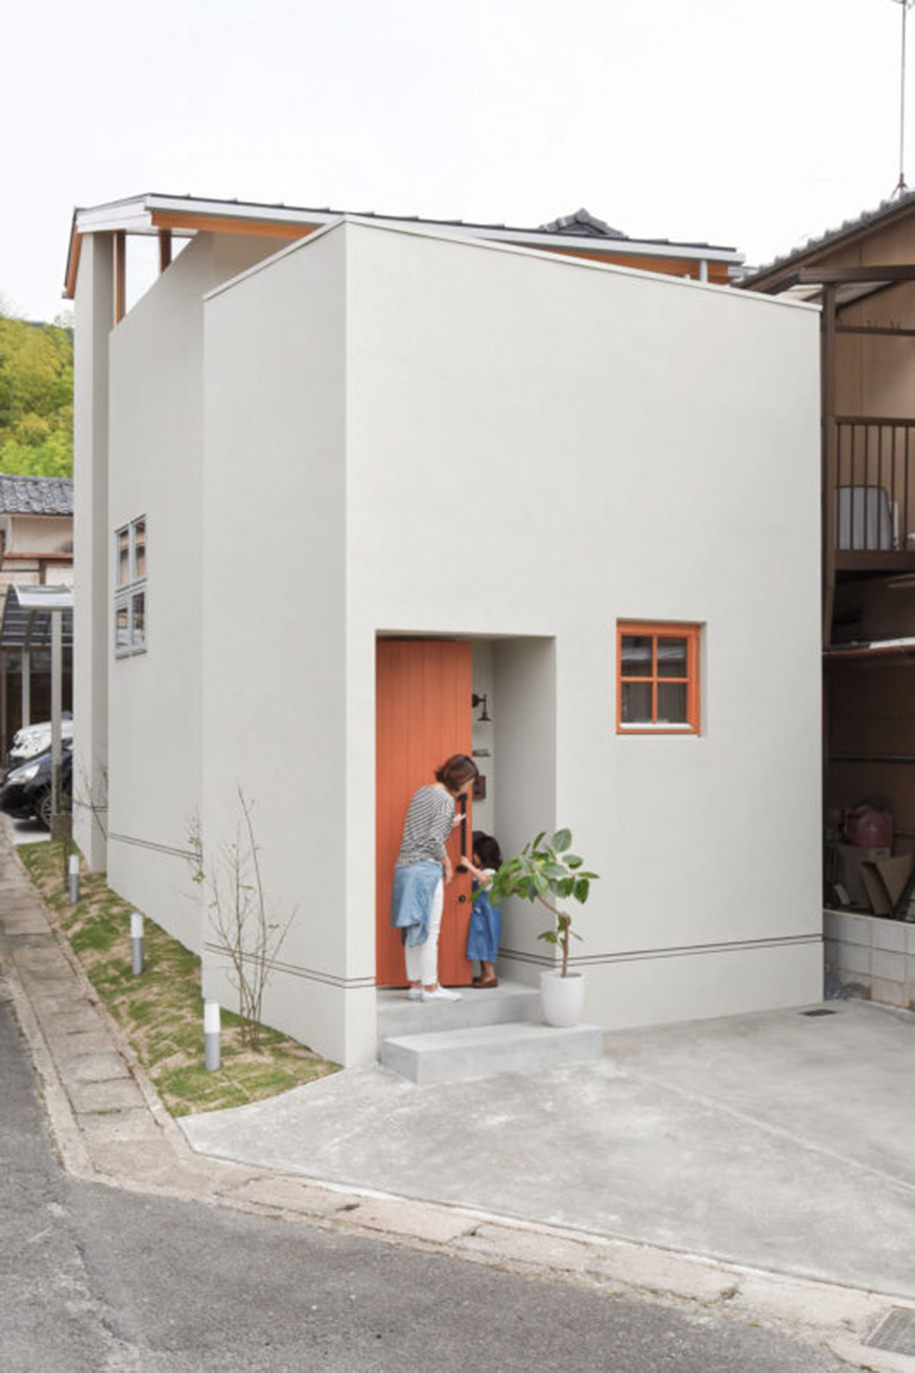 Yamashina House, rebuilding, kyoto, japan, alts design office